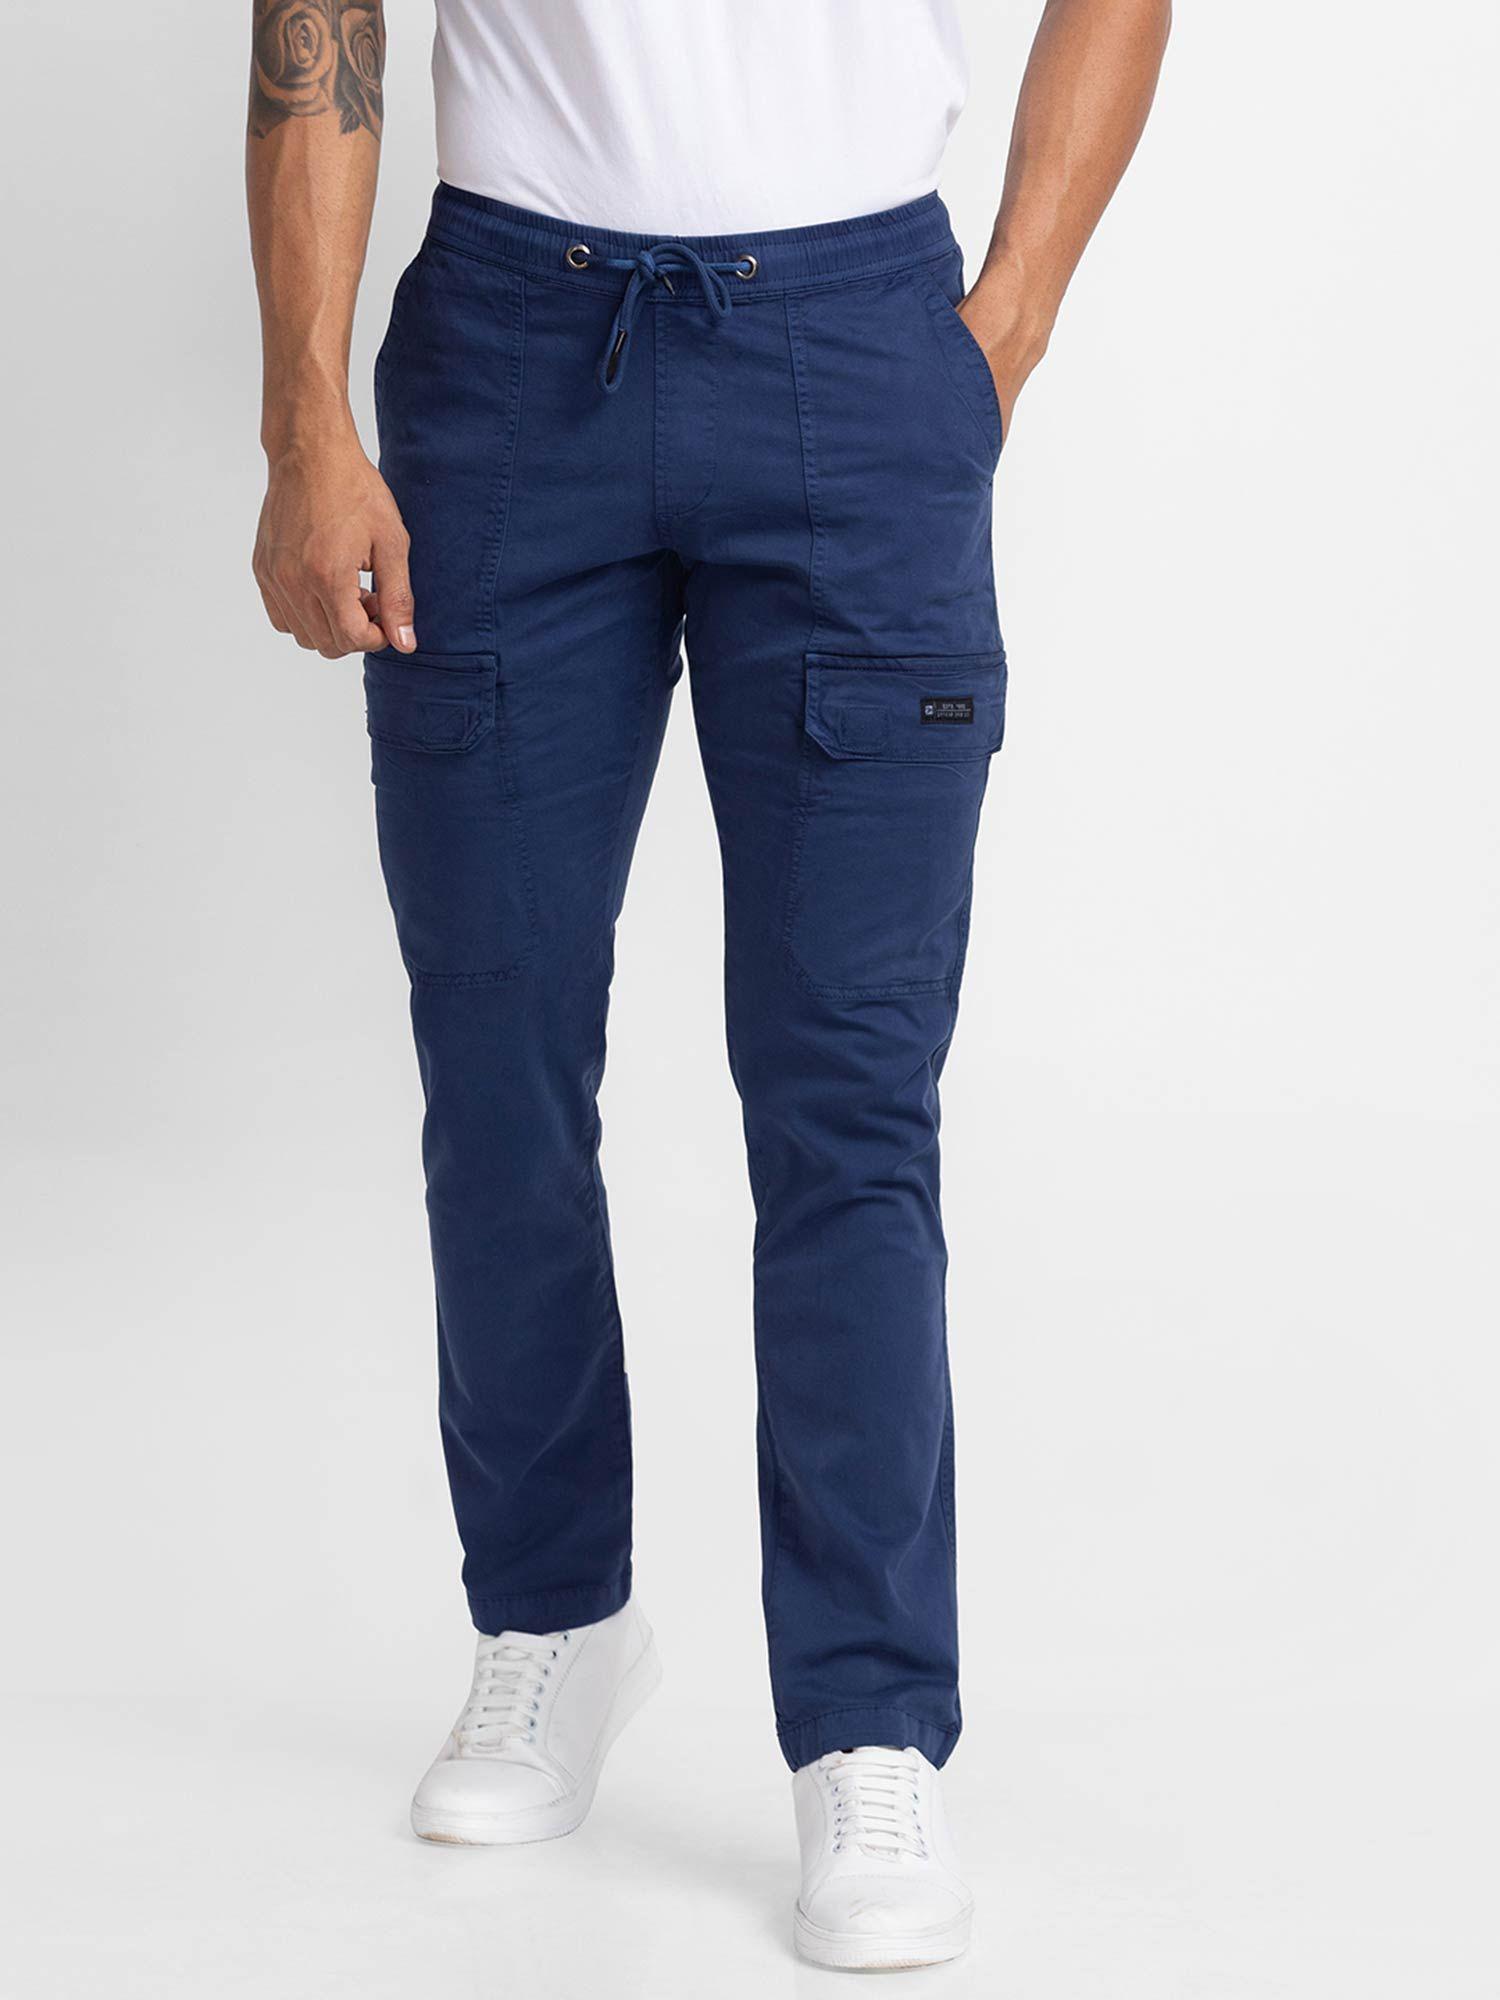 navy-blue-cotton-slim-fit-regular-length-trousers-for-men